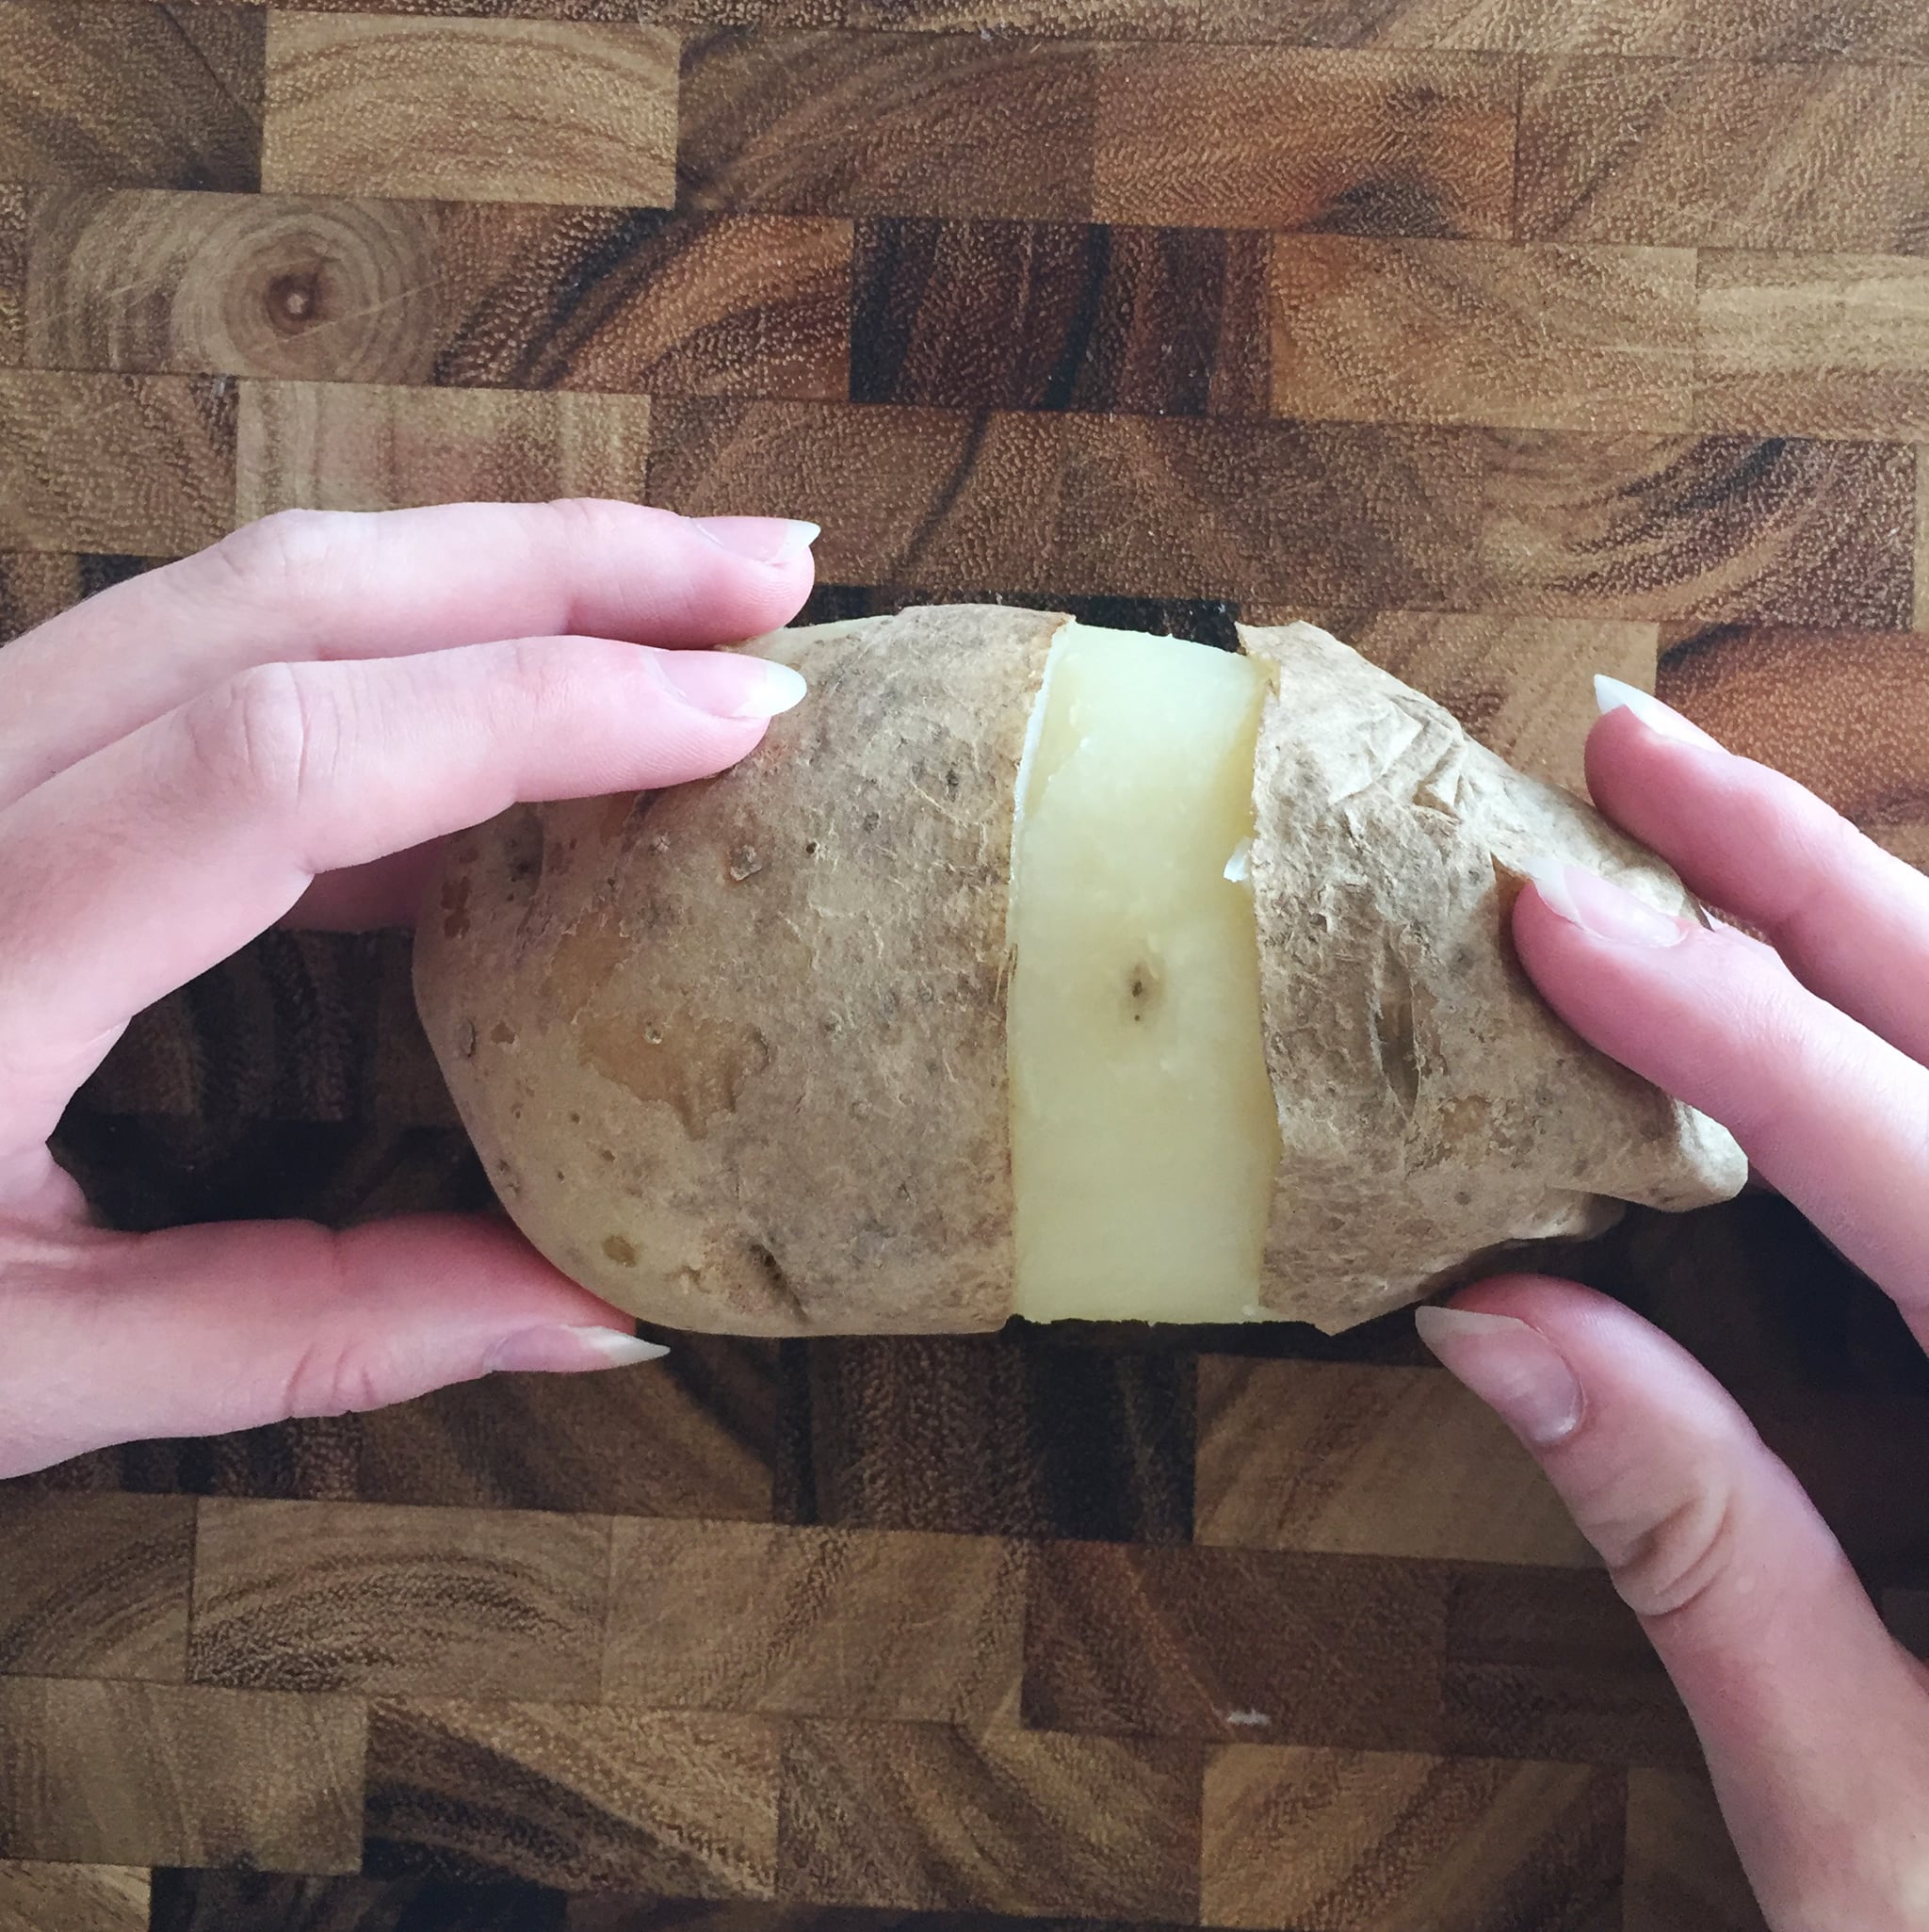 Woman hold potato on cutting board